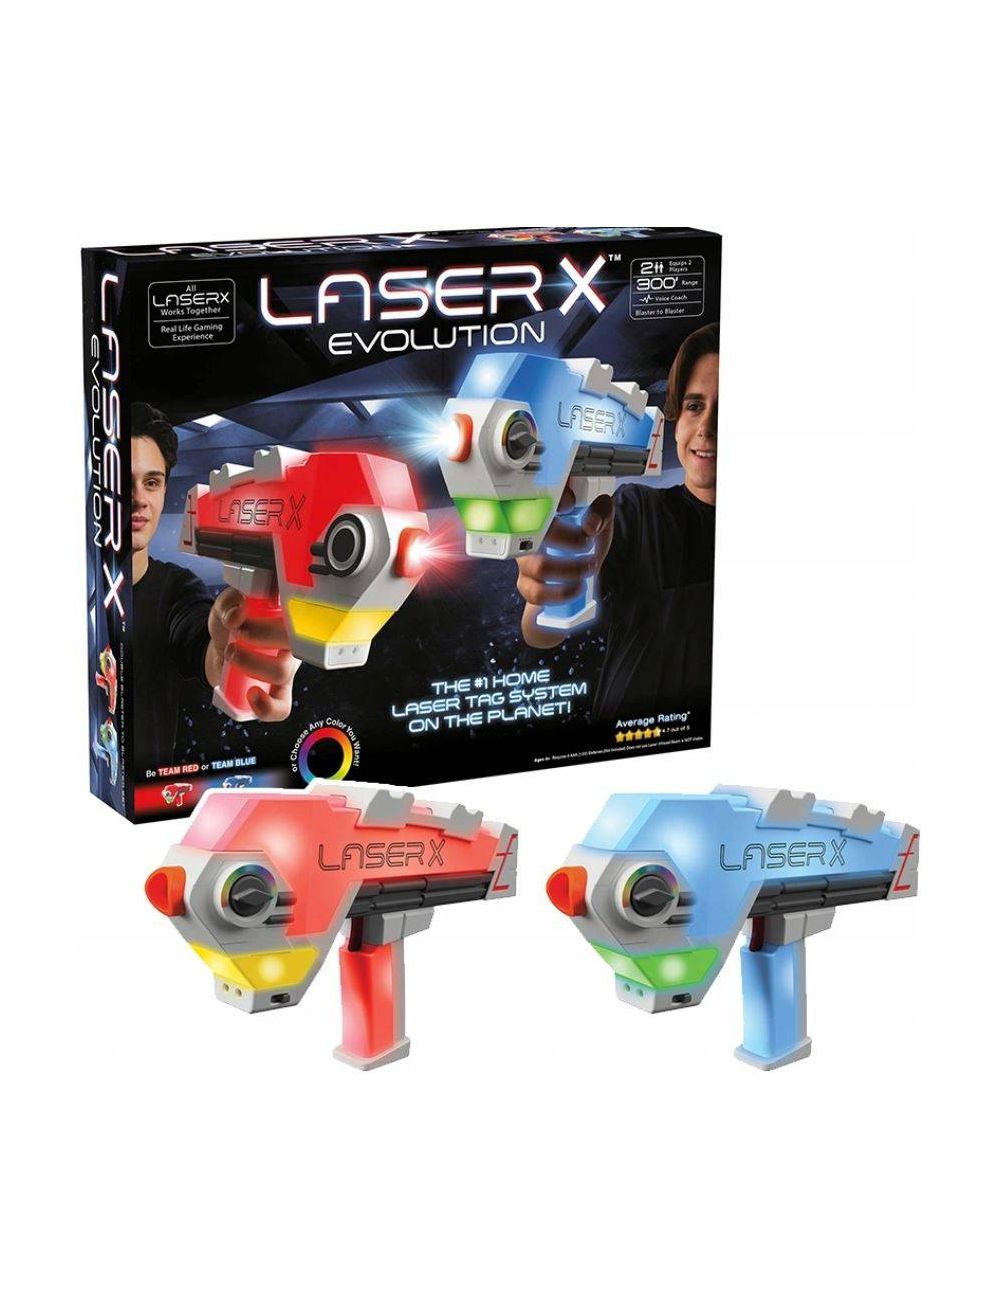 Laser X Double Blaster Evolution